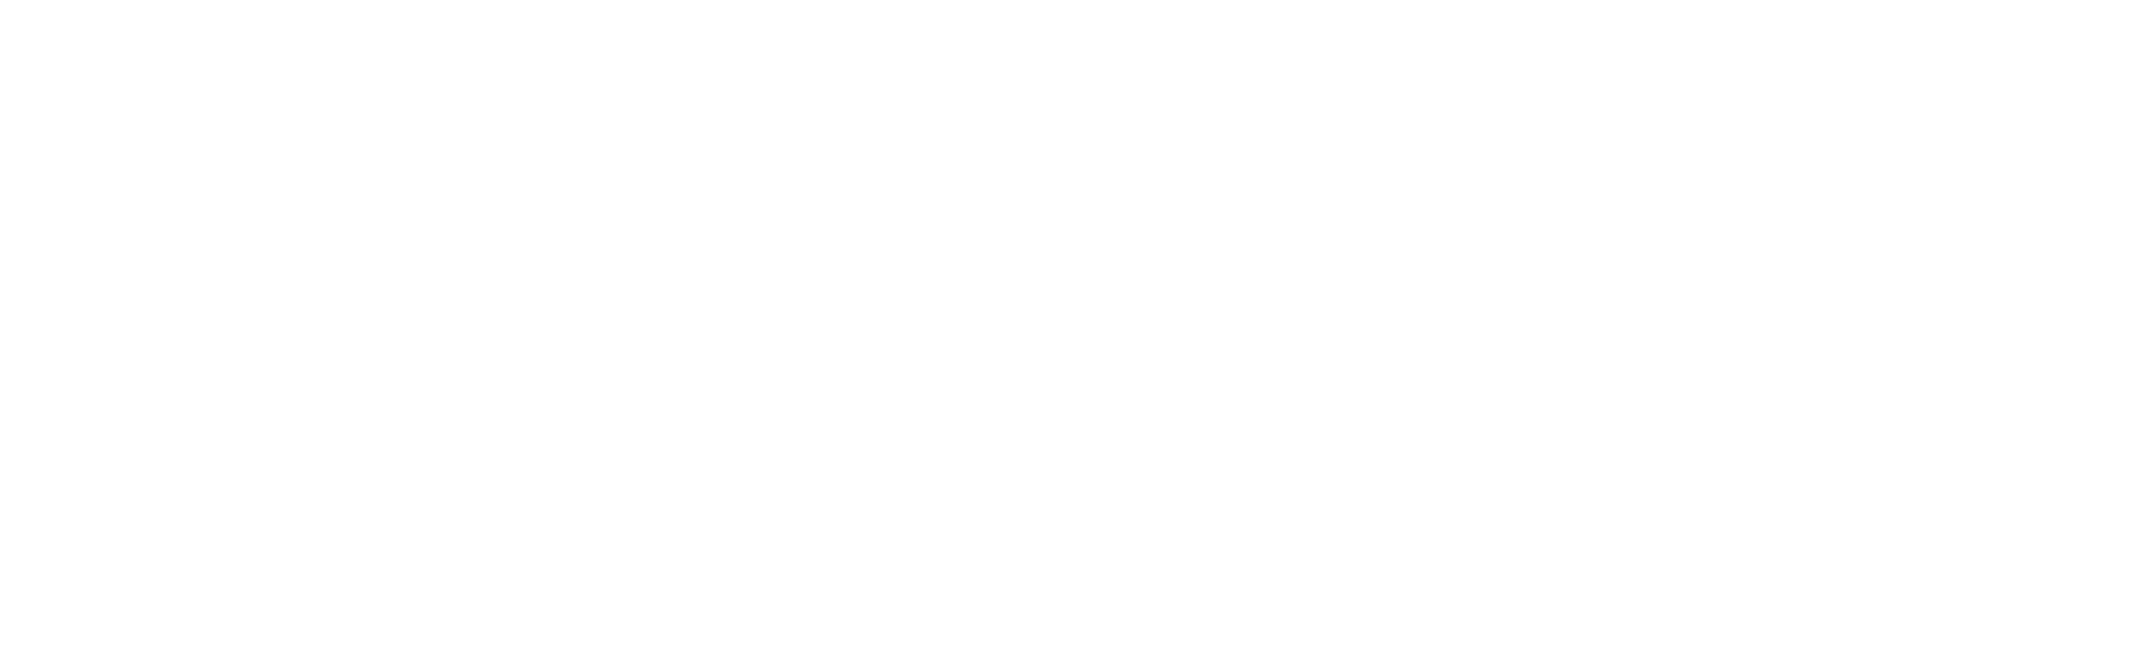 Mac Mechanical